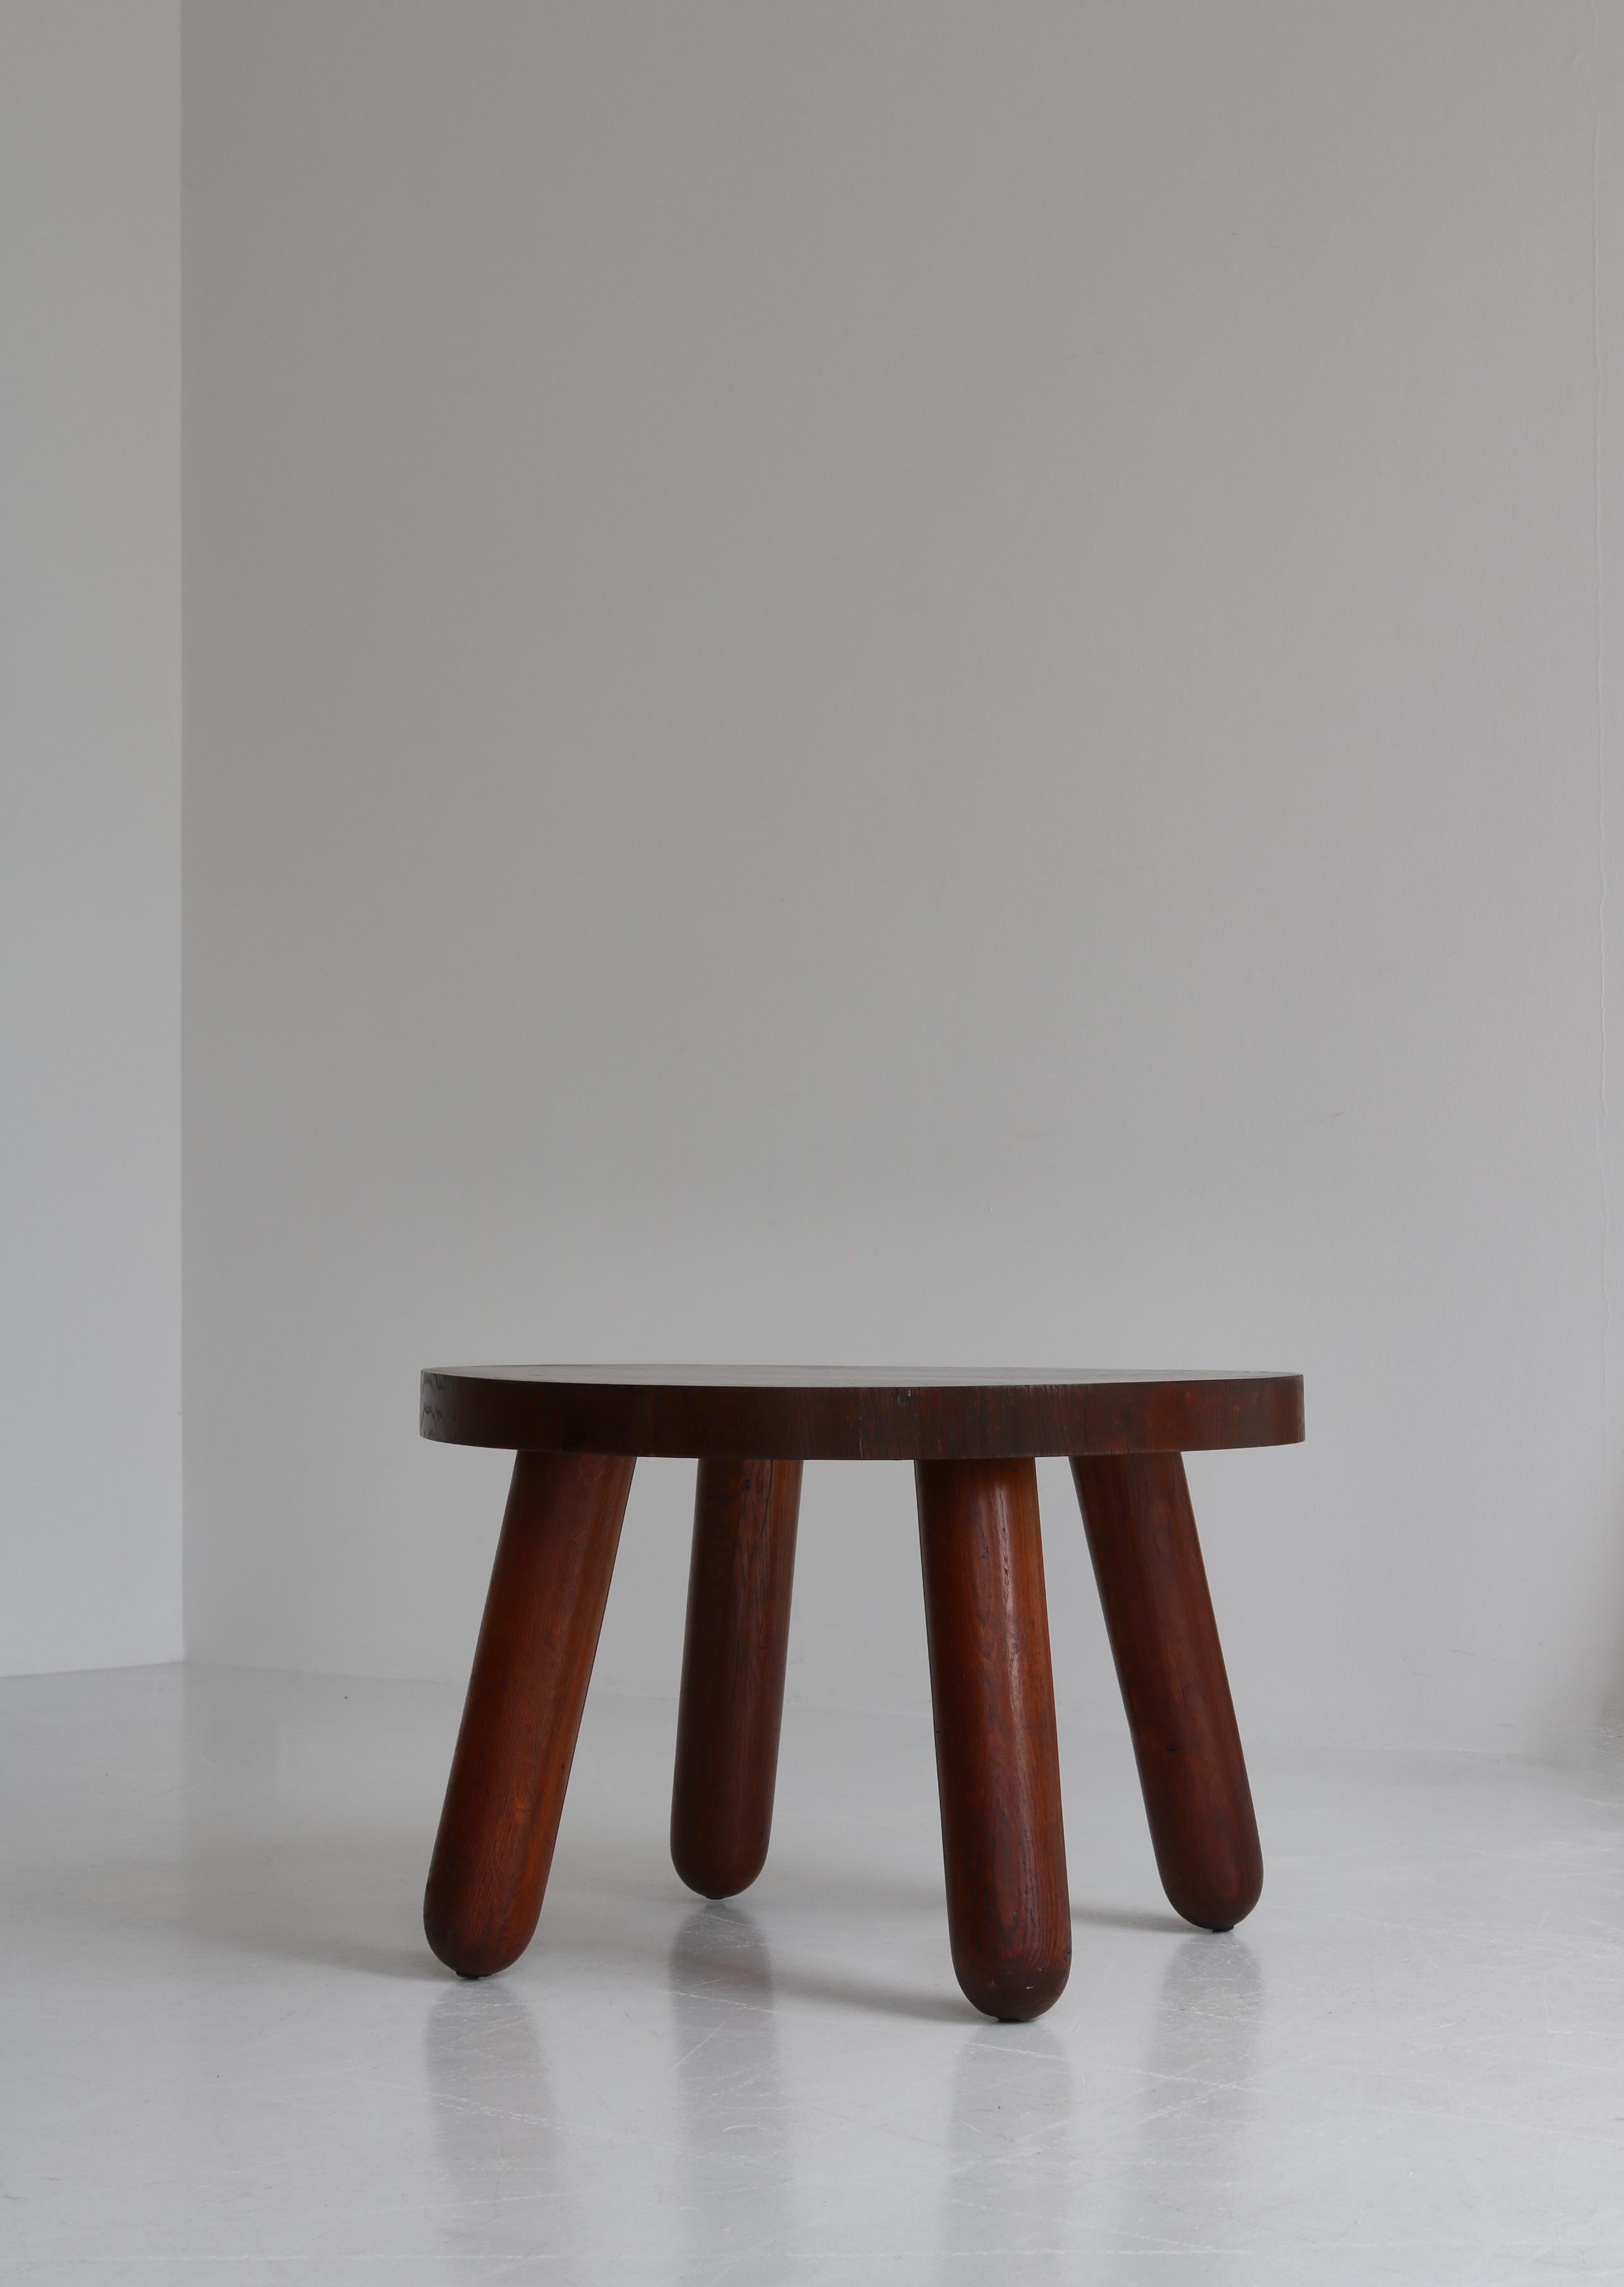 Scandinavian Modern Chunky Danish Modern Side Table in Stained Oak by Otto Færge, Denmark, 1940s For Sale